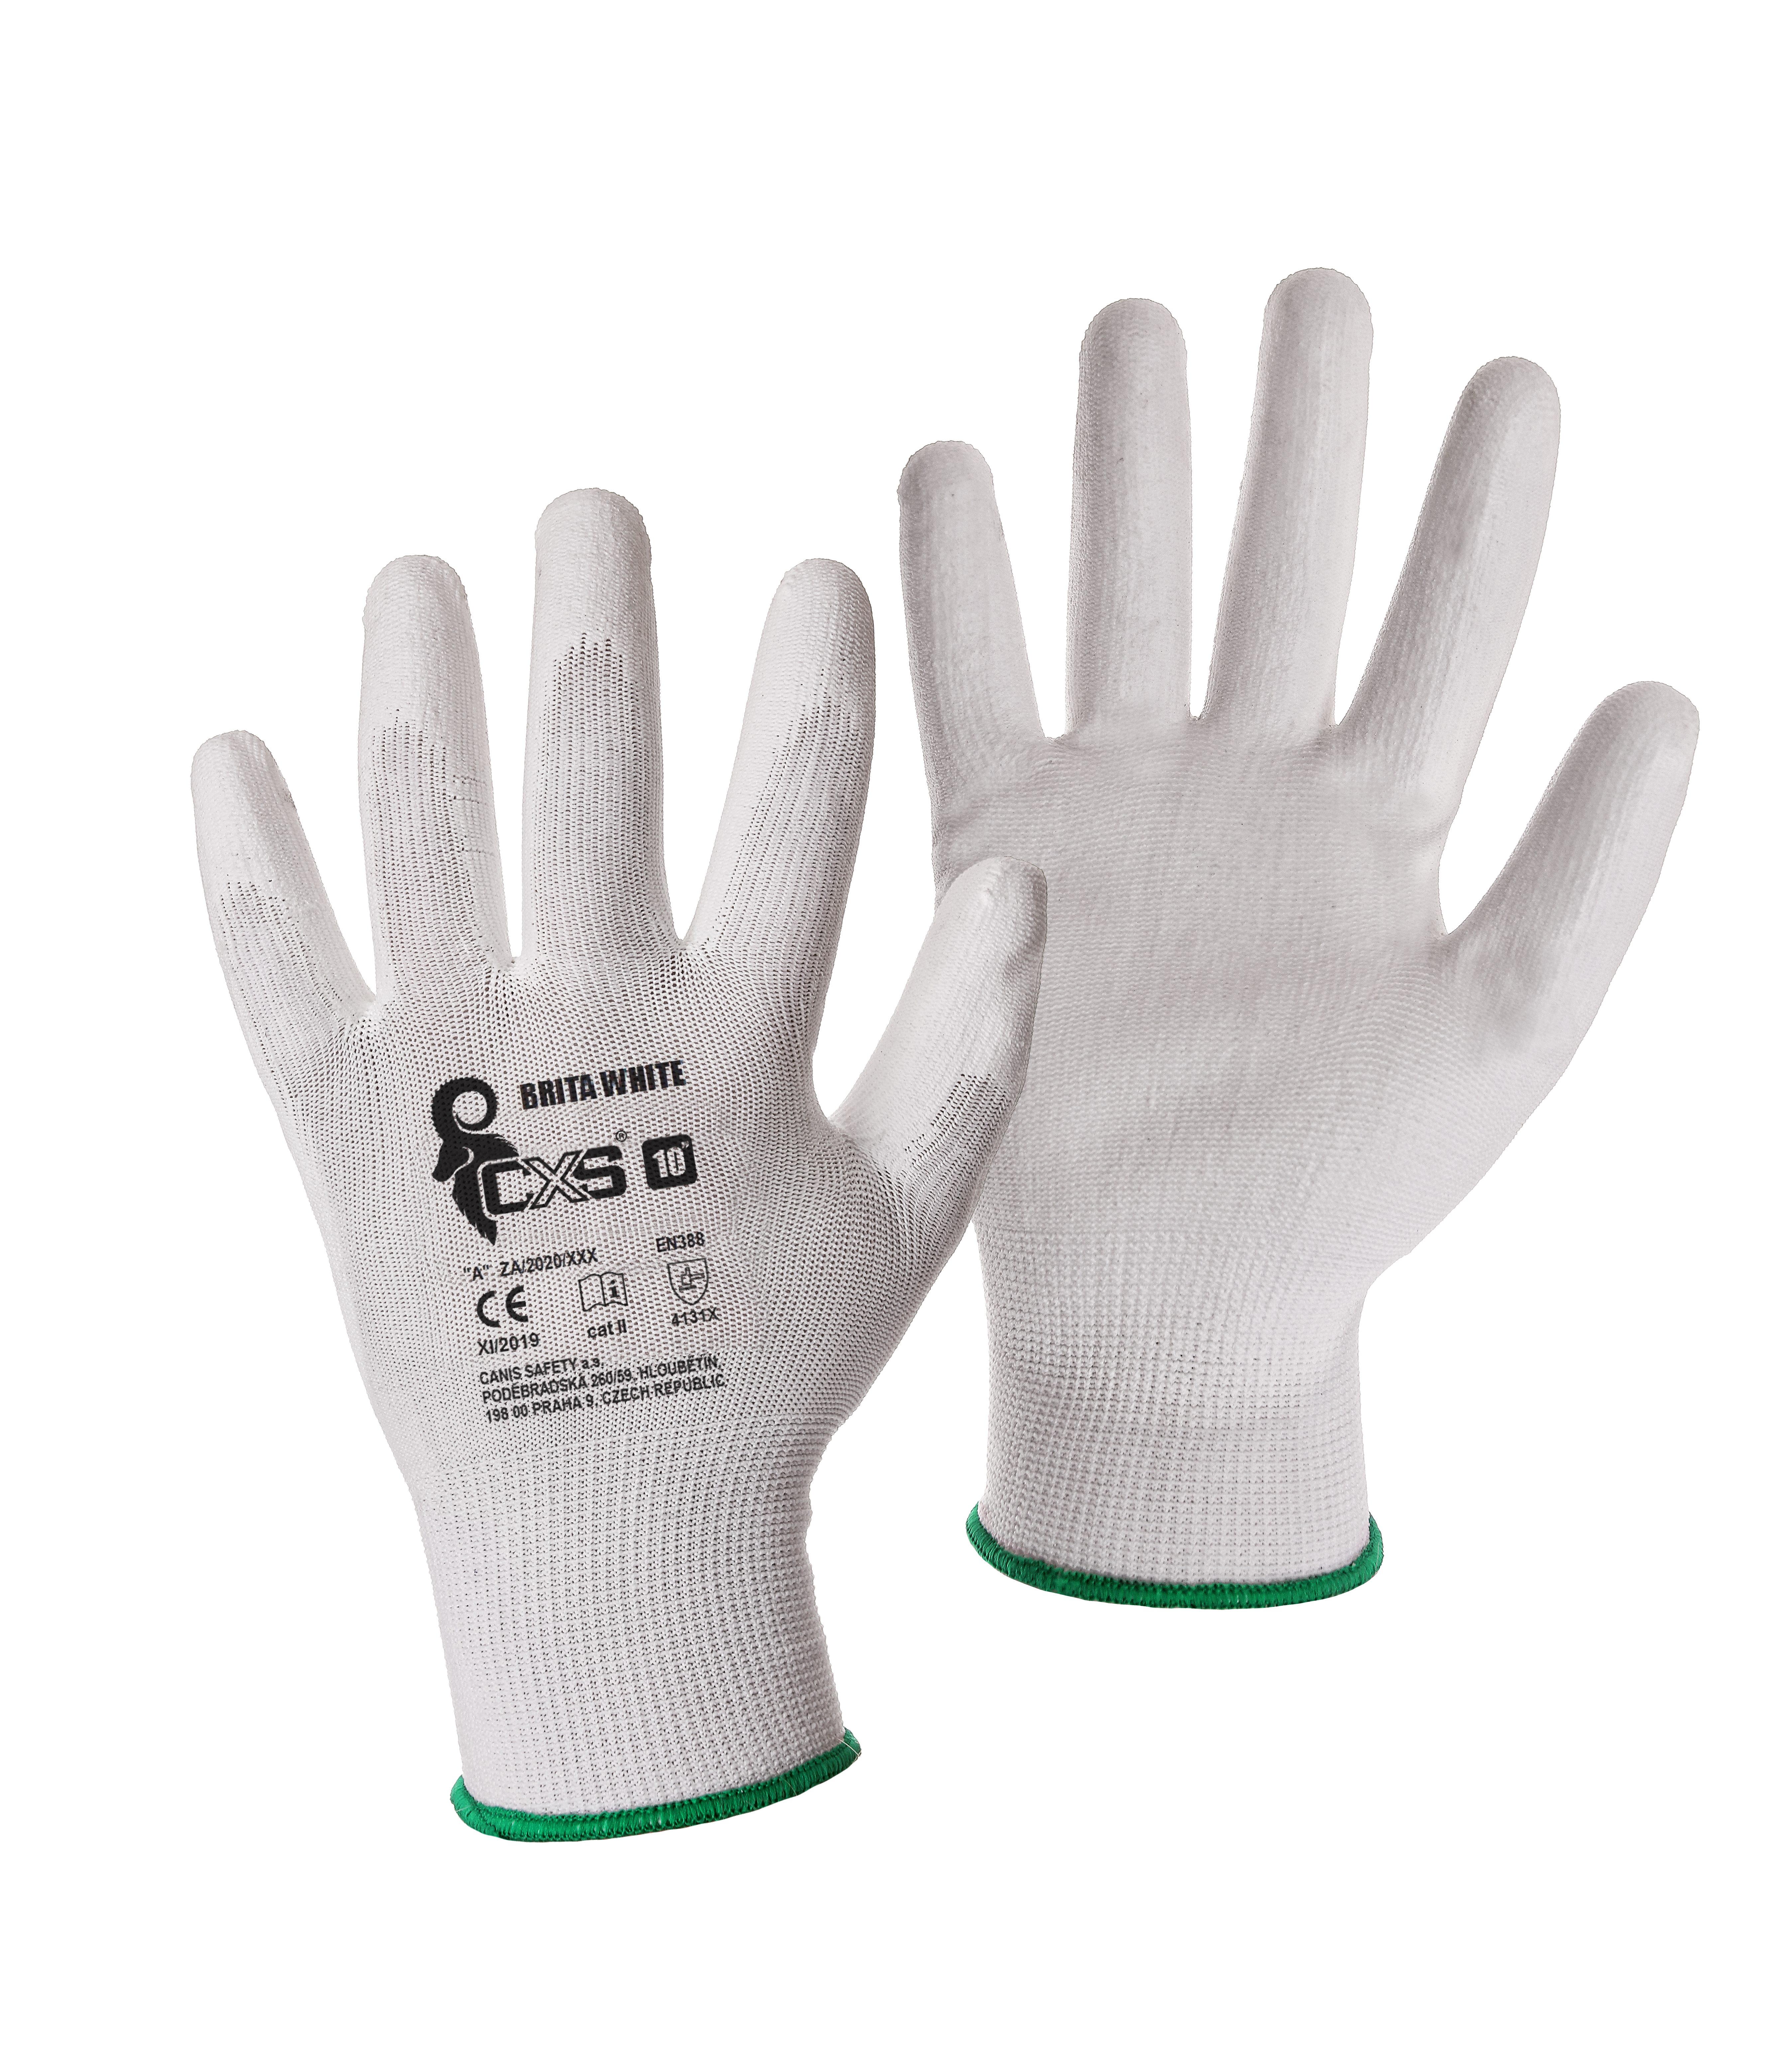 rukavice BRITA WHITE, s PU dlaní a úpletem, velikost 7 0.02 Kg TOP Sklad4 606041 150